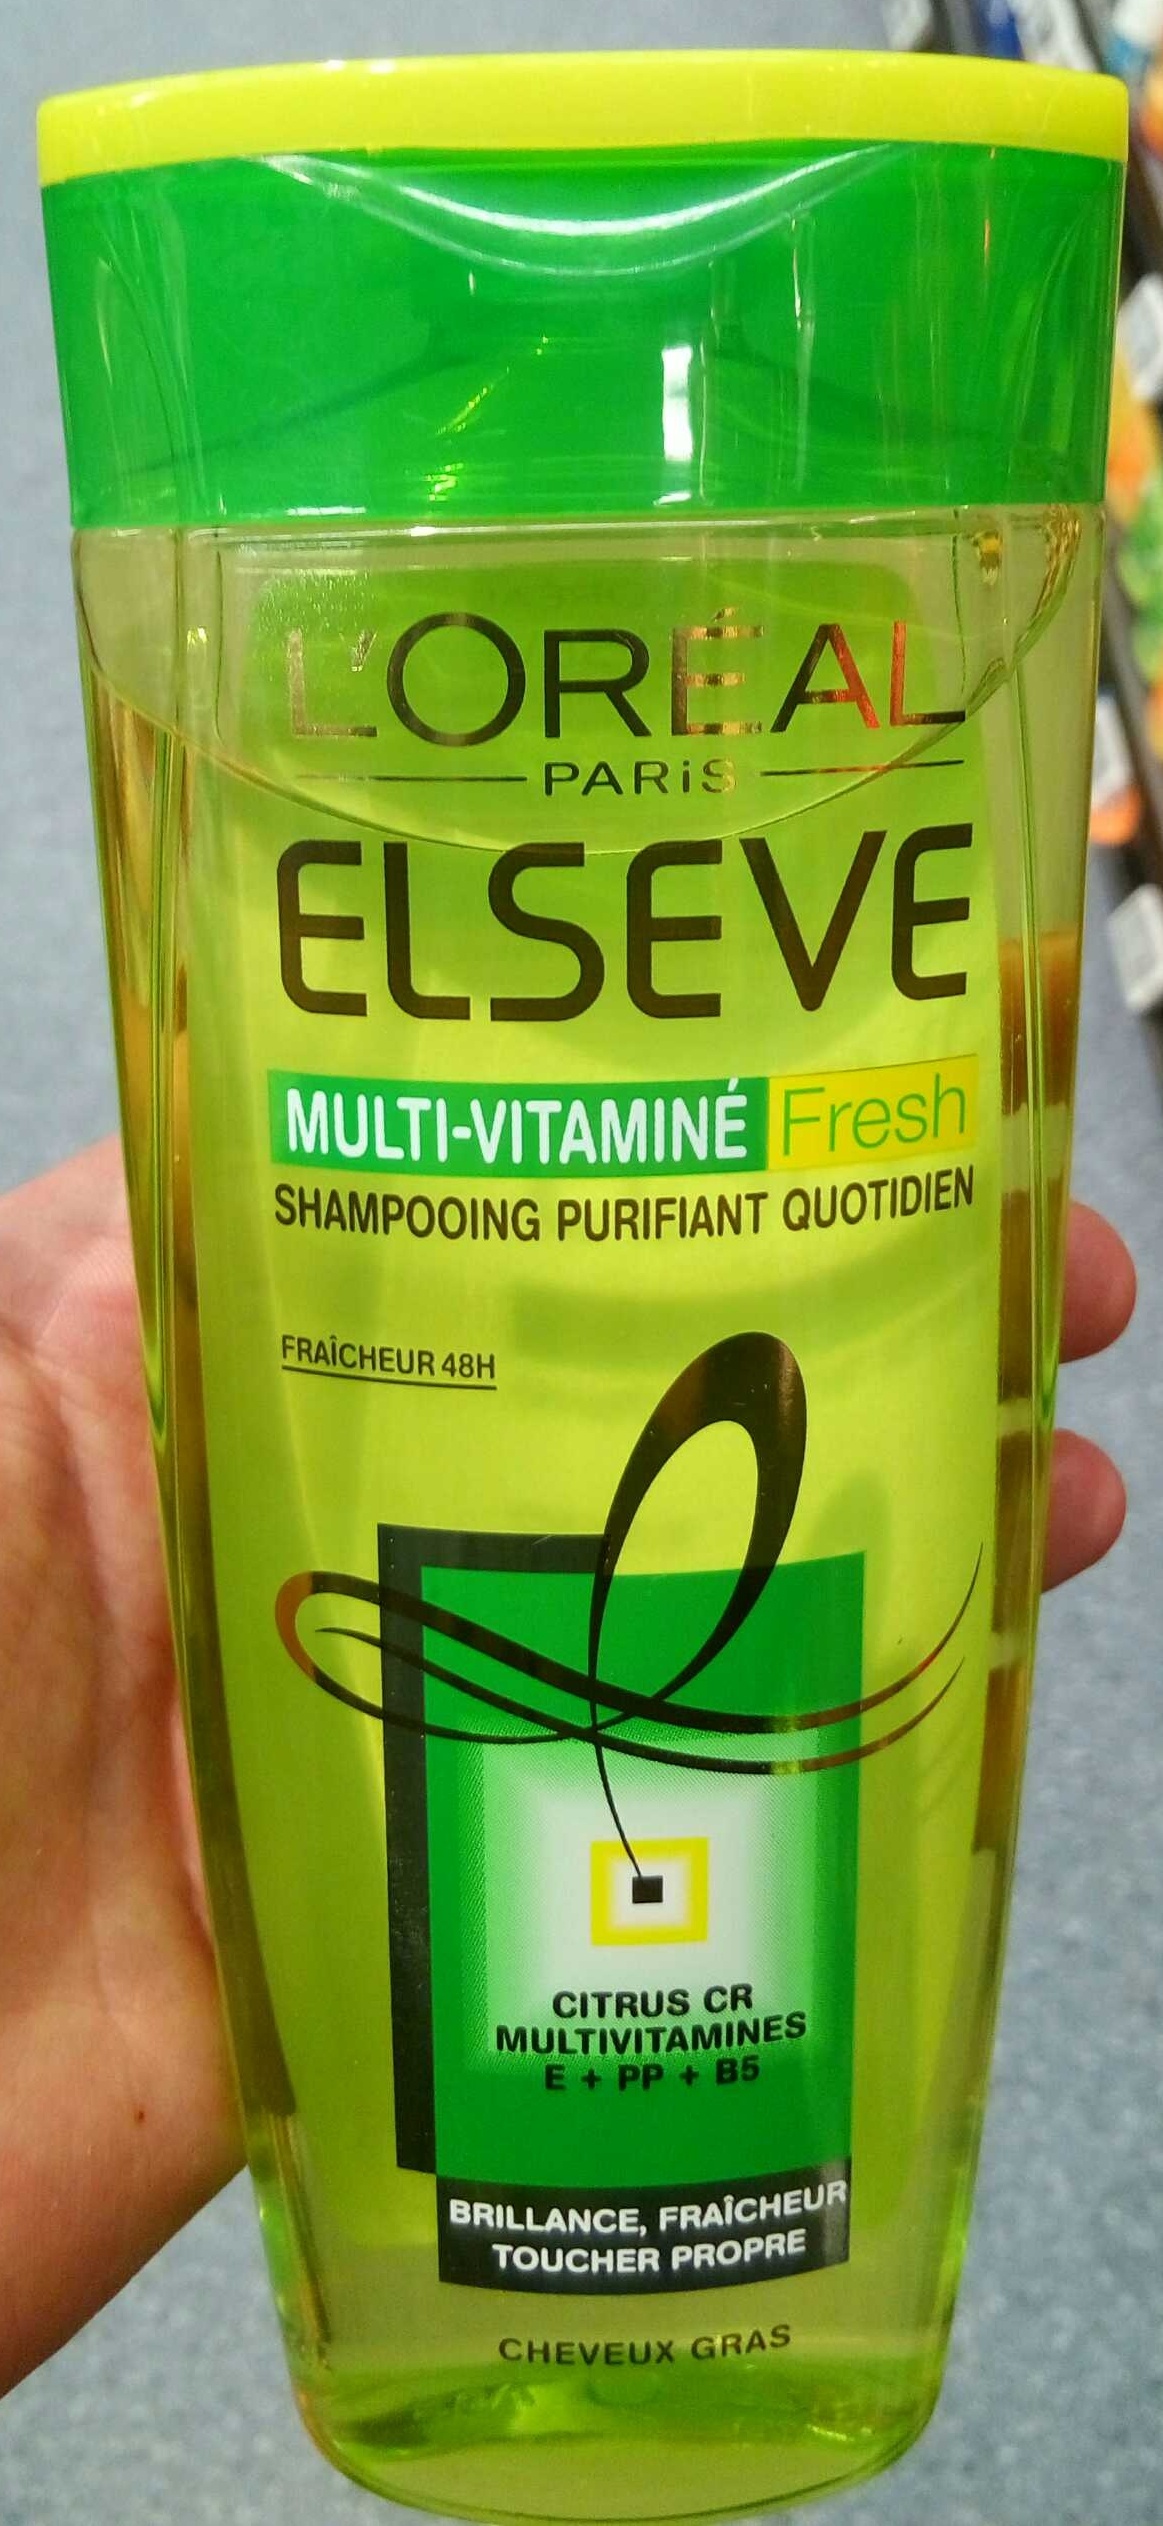 Elseve Multi-Vitaminé Fresh Shampooing purifiant quotidien - Product - fr